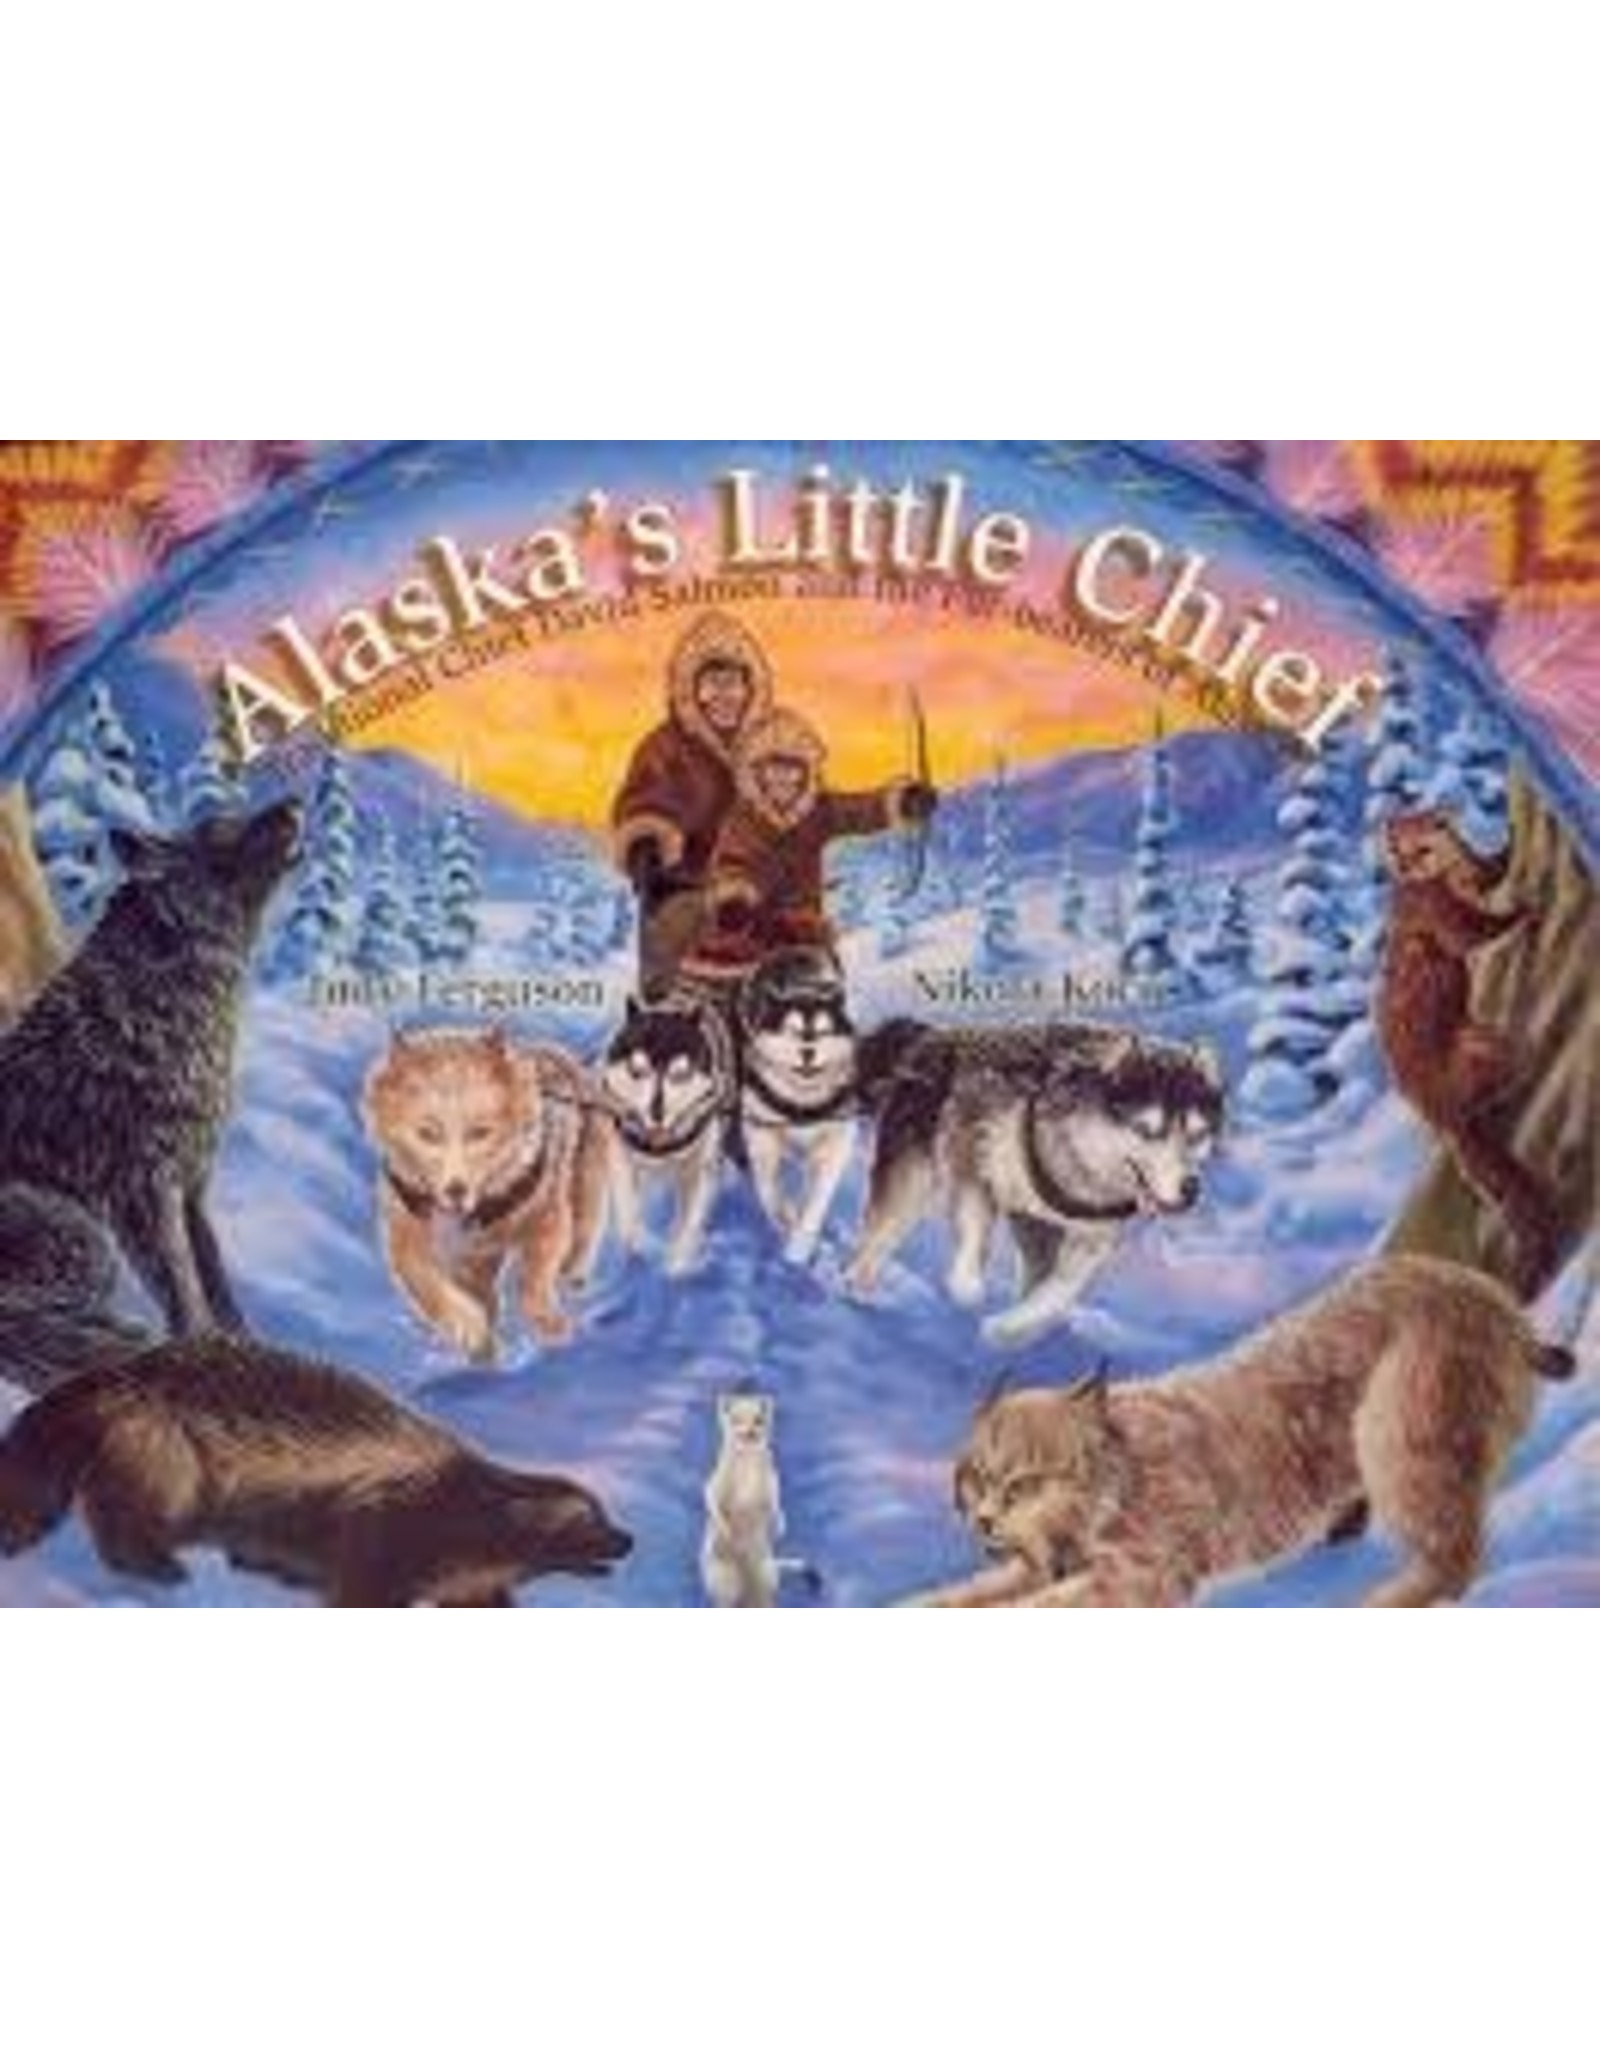 Alaskas Little Chief with CD - Judy Ferguson